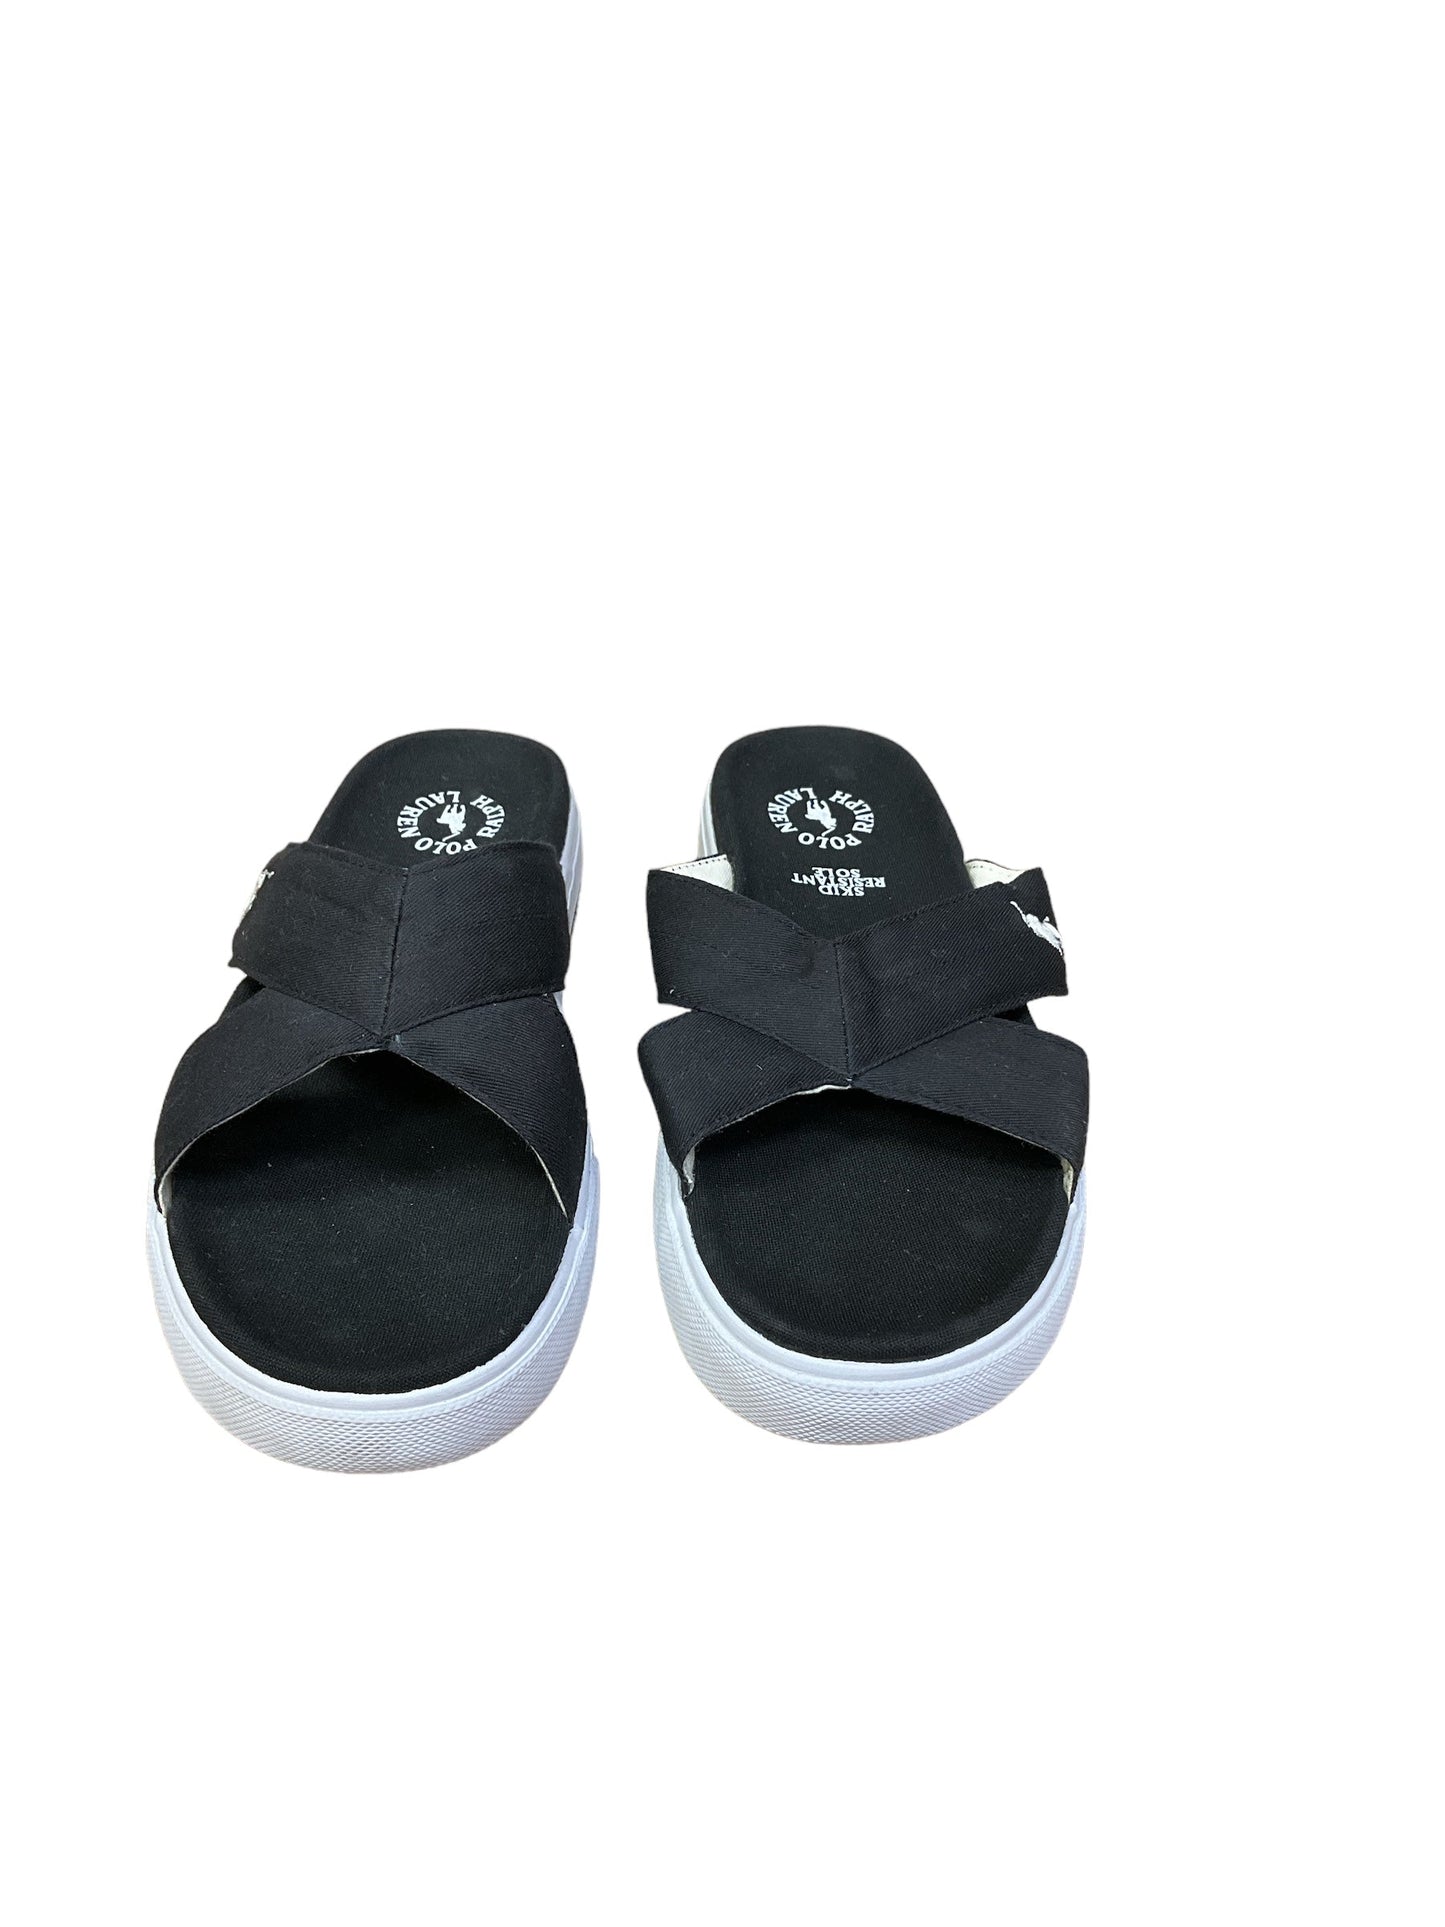 Black Sandals Flats Polo Ralph Lauren, Size 7.5